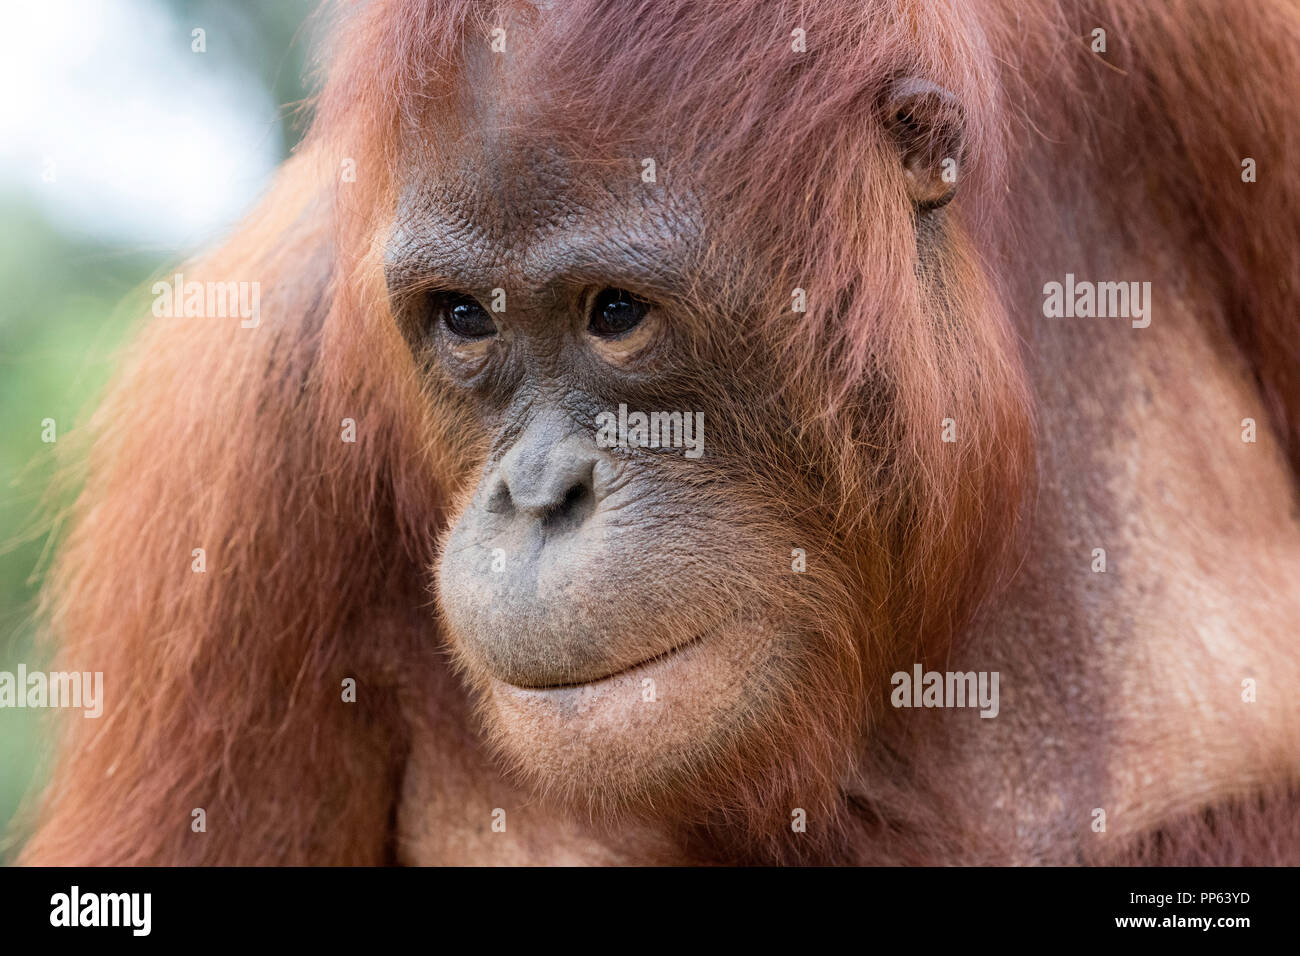 The Orangutan (Pongo pygmaeus), Borneo, Indonesia. Stock Photo